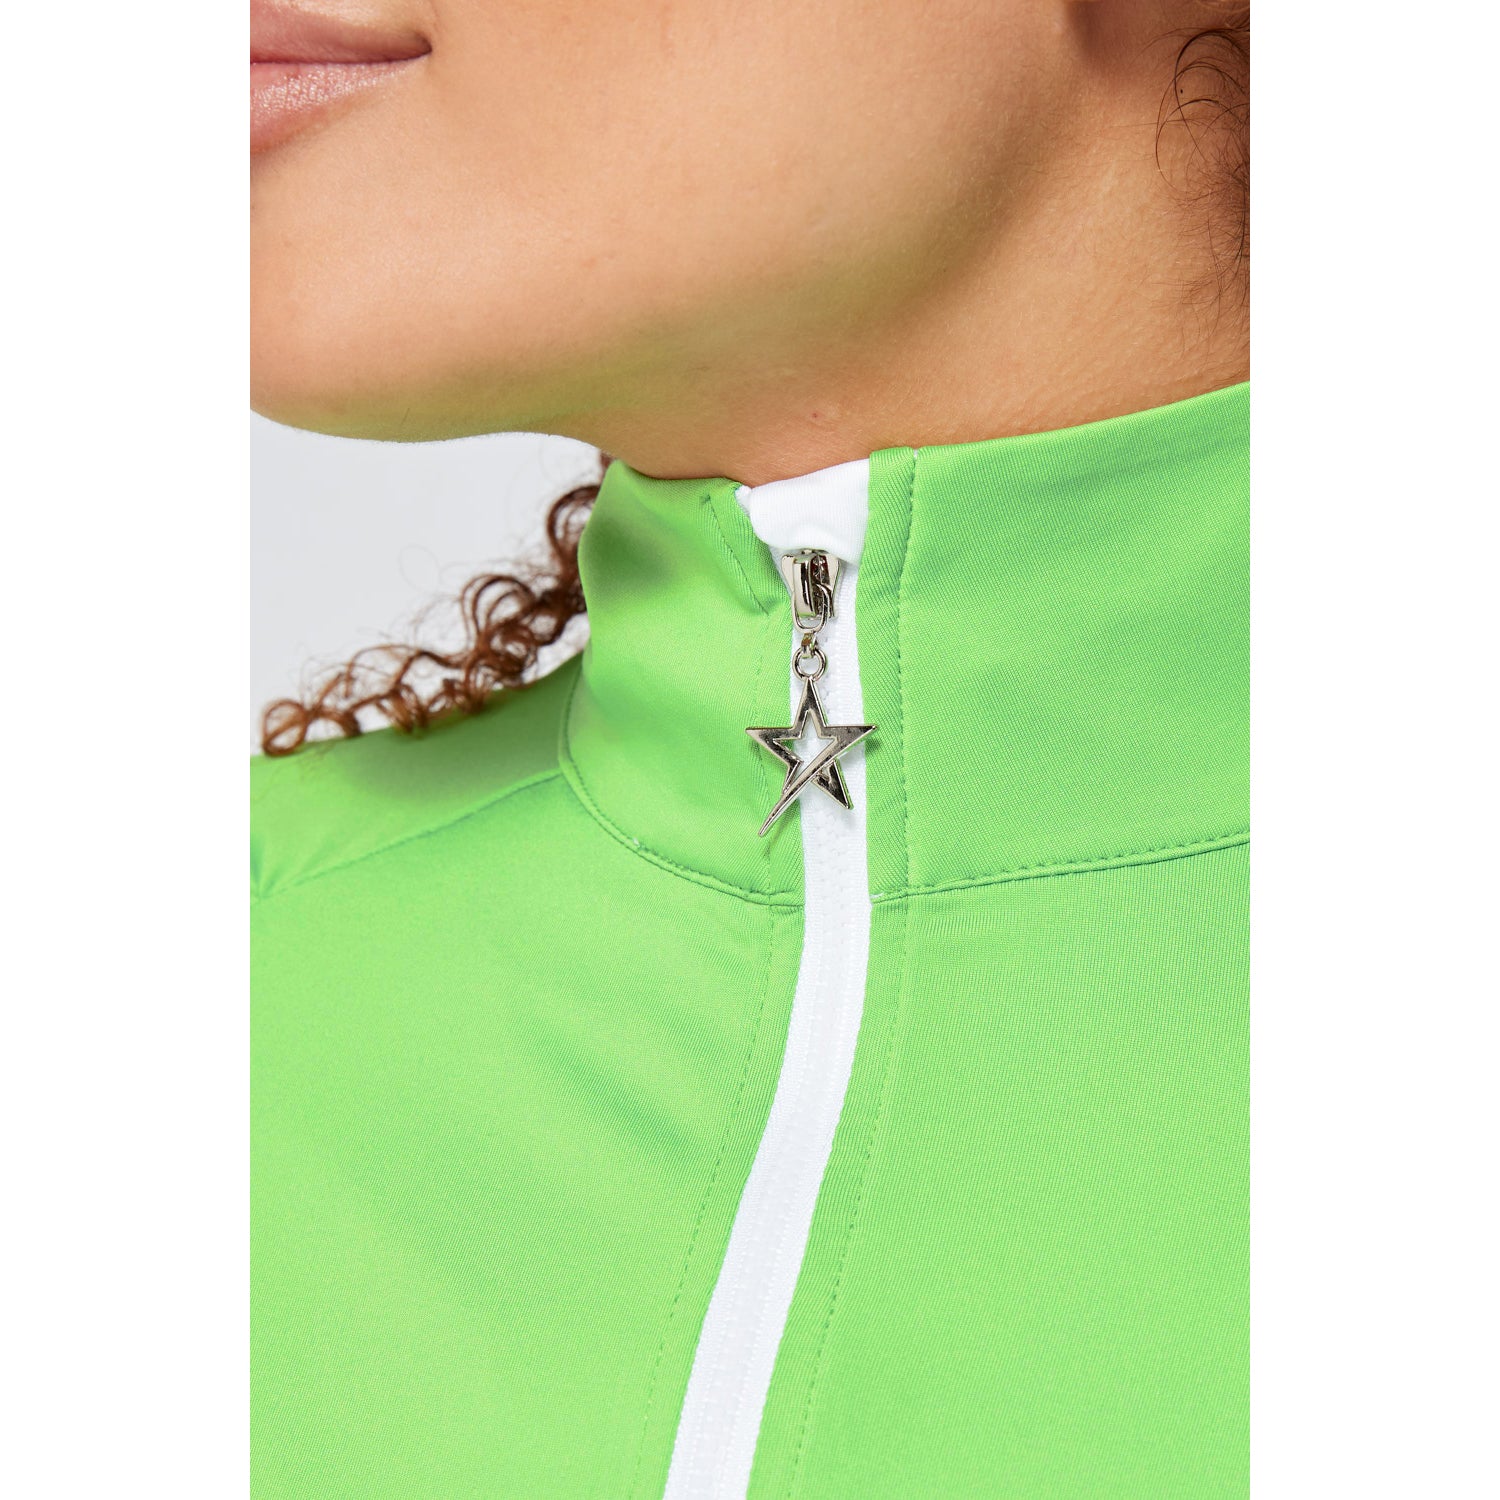 Swing Out Sister Women's Zip-Neck Top in Emerald